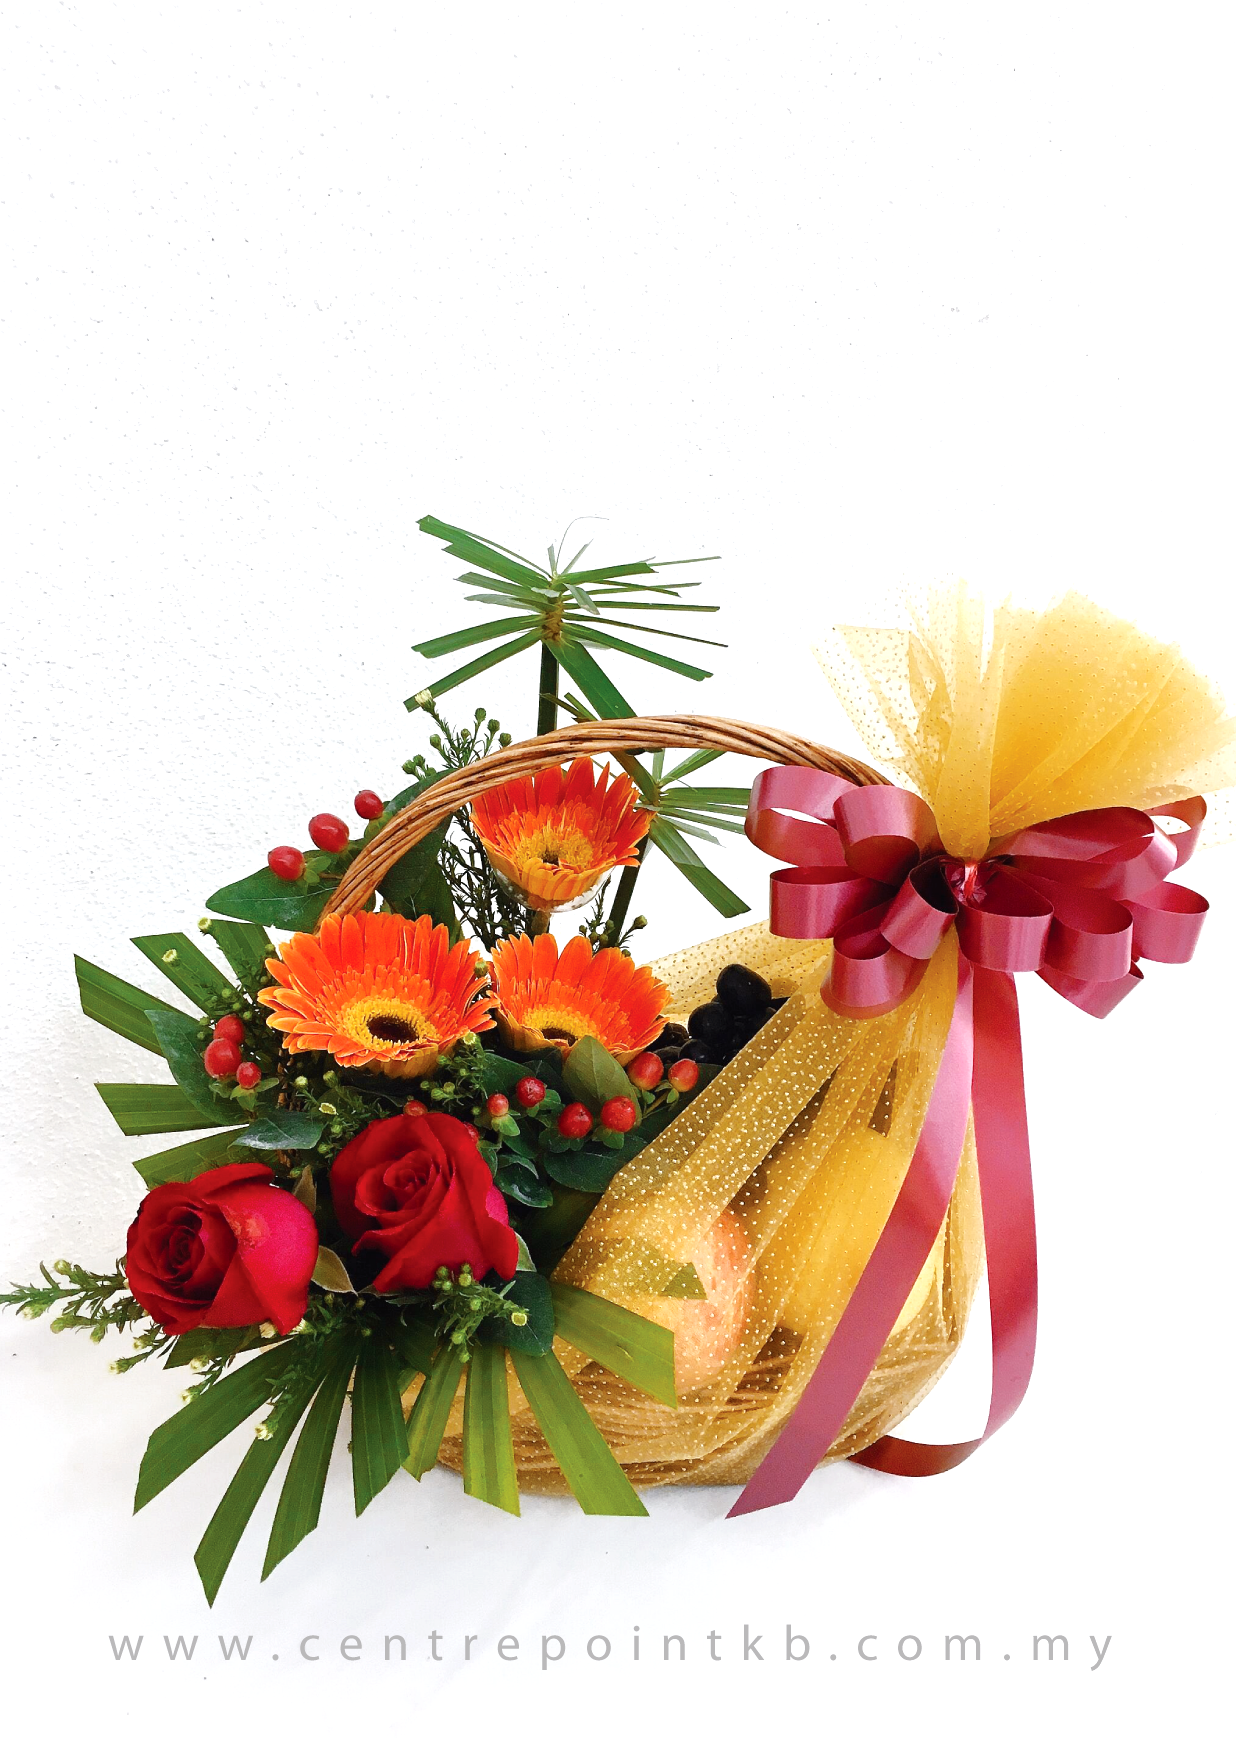 Fruit & Flower Basket 13 (RM 80.00)